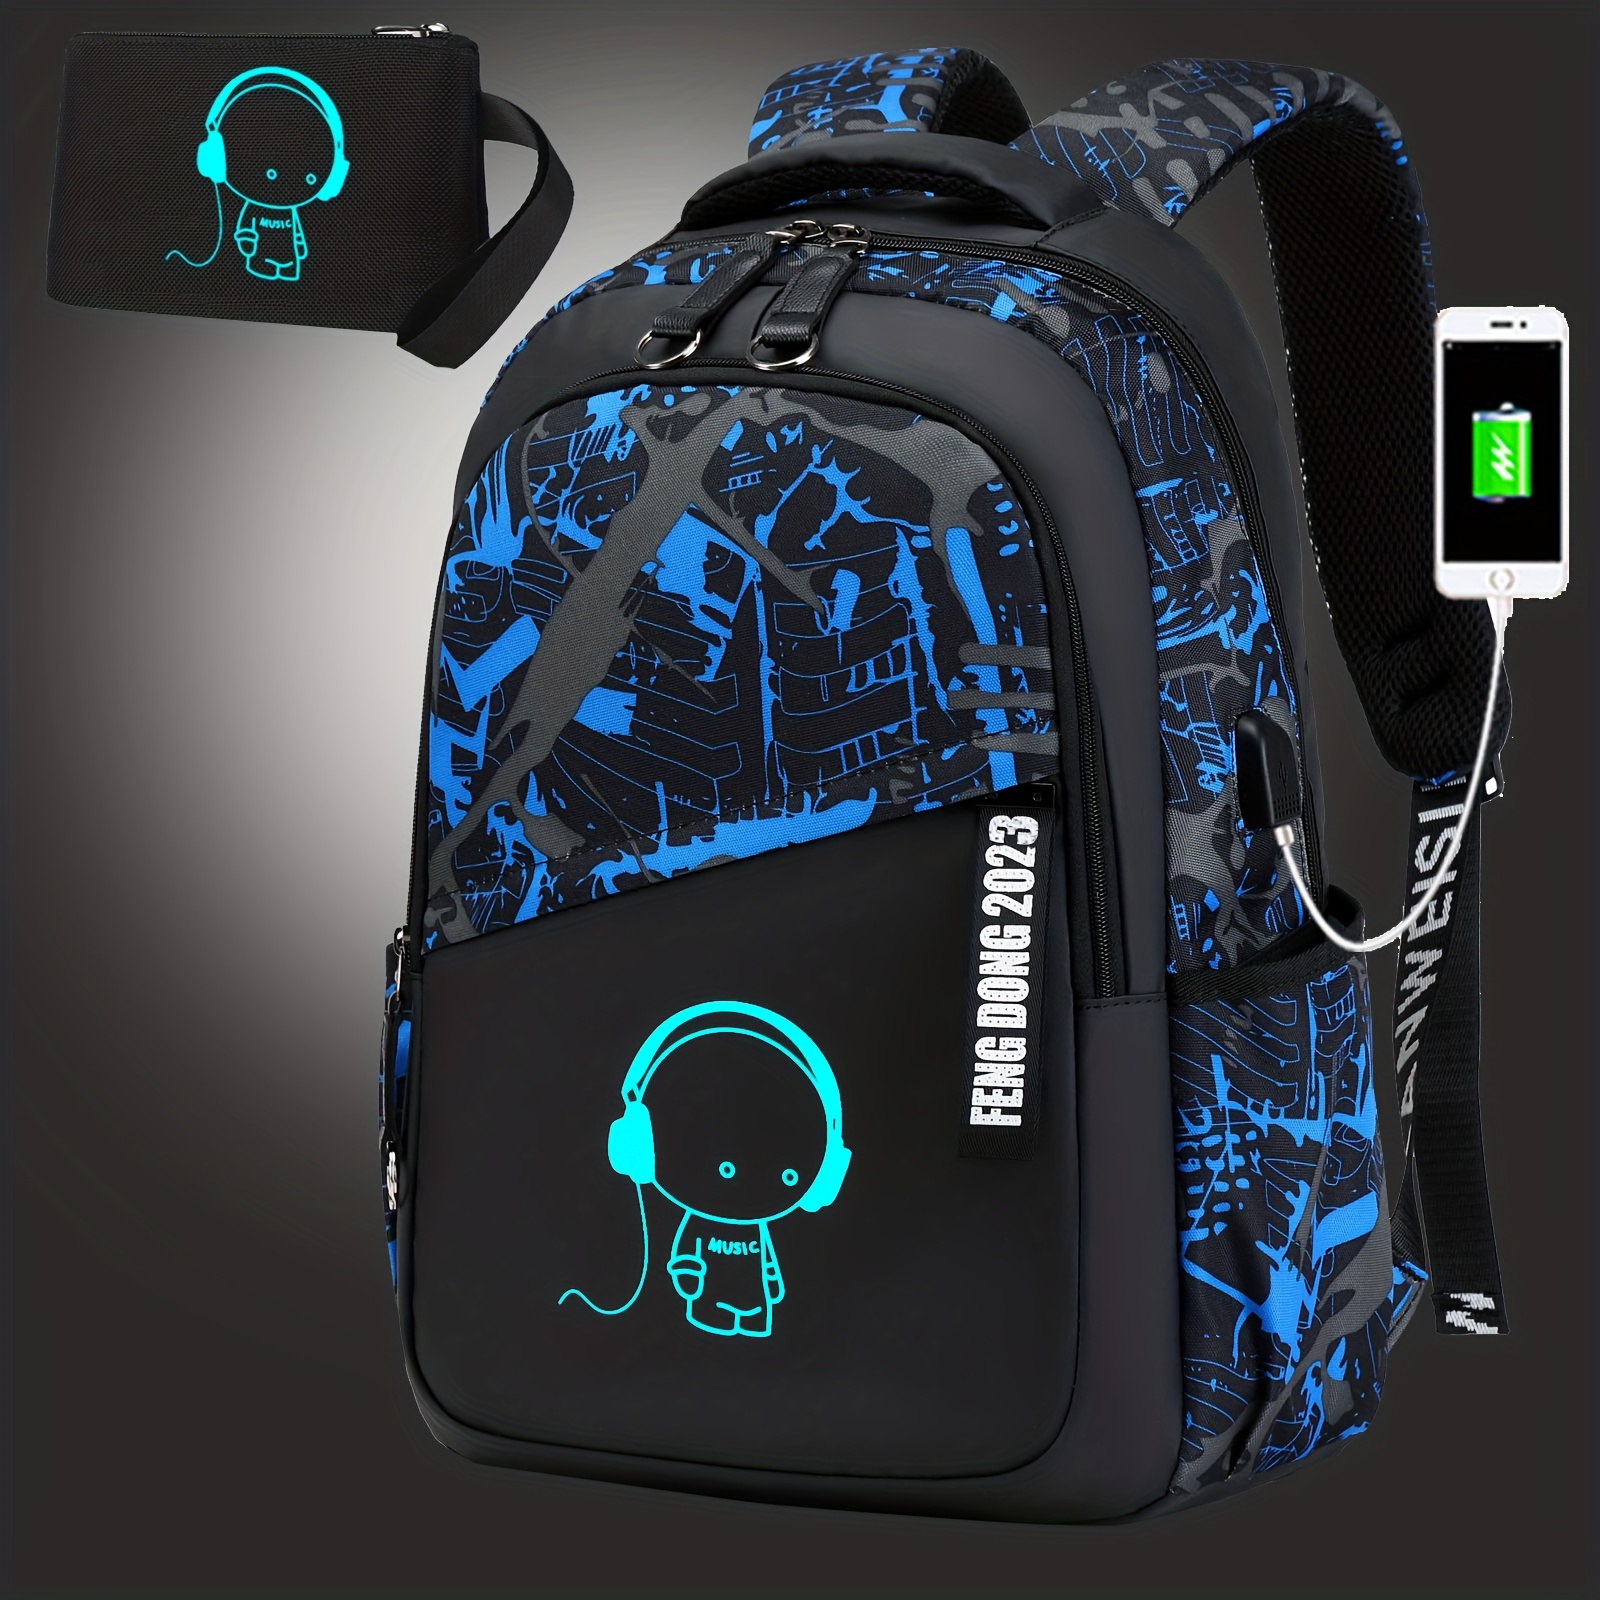 Luminous School Backpack Cool Boys School Backpack Music Boy